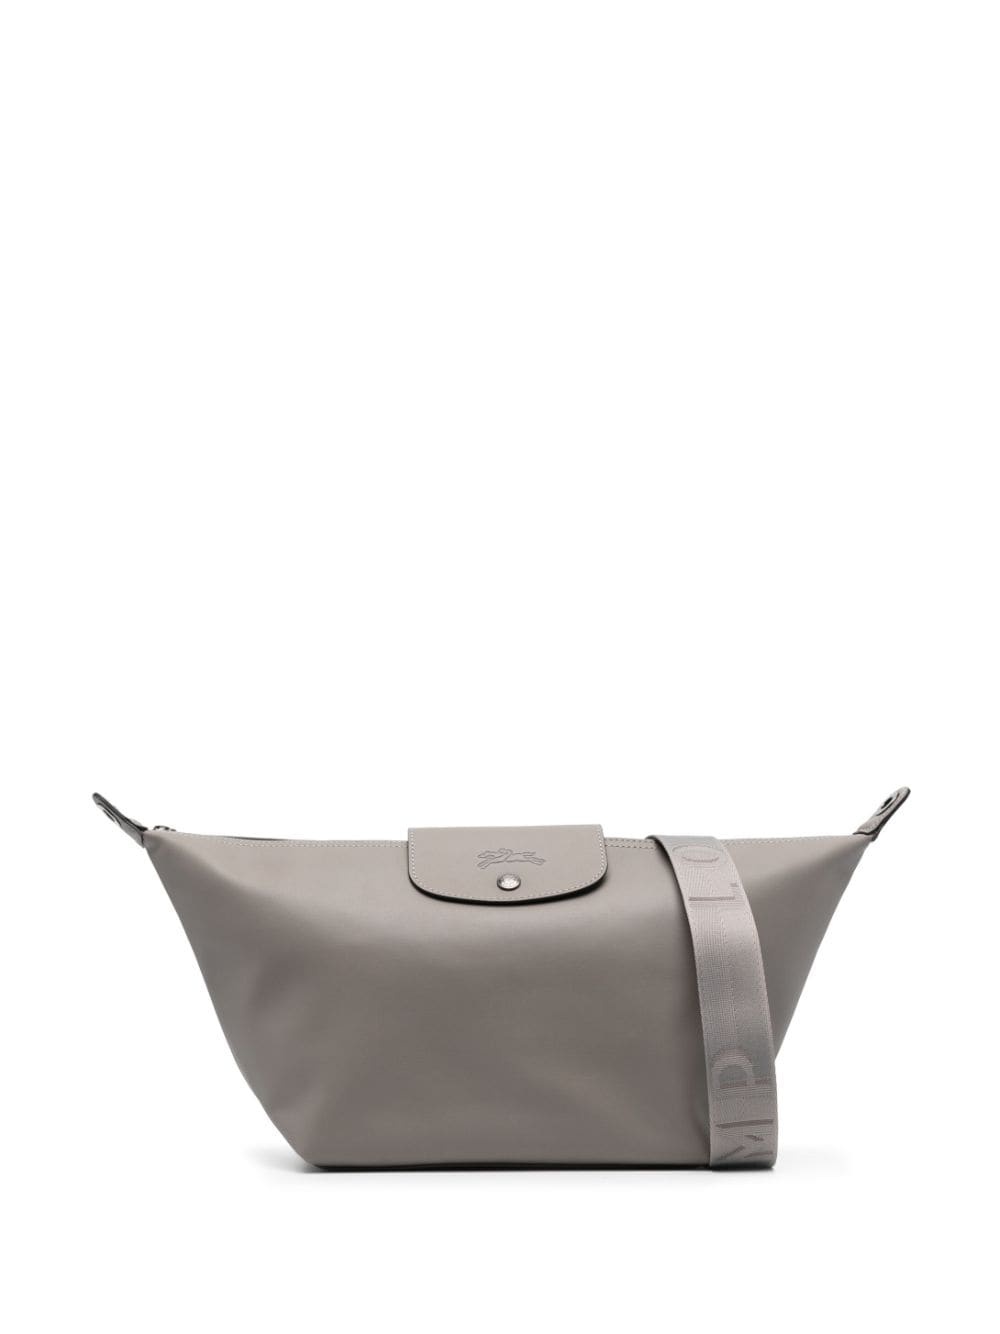 Longchamp Le Pliage Hobo Bag in Grey